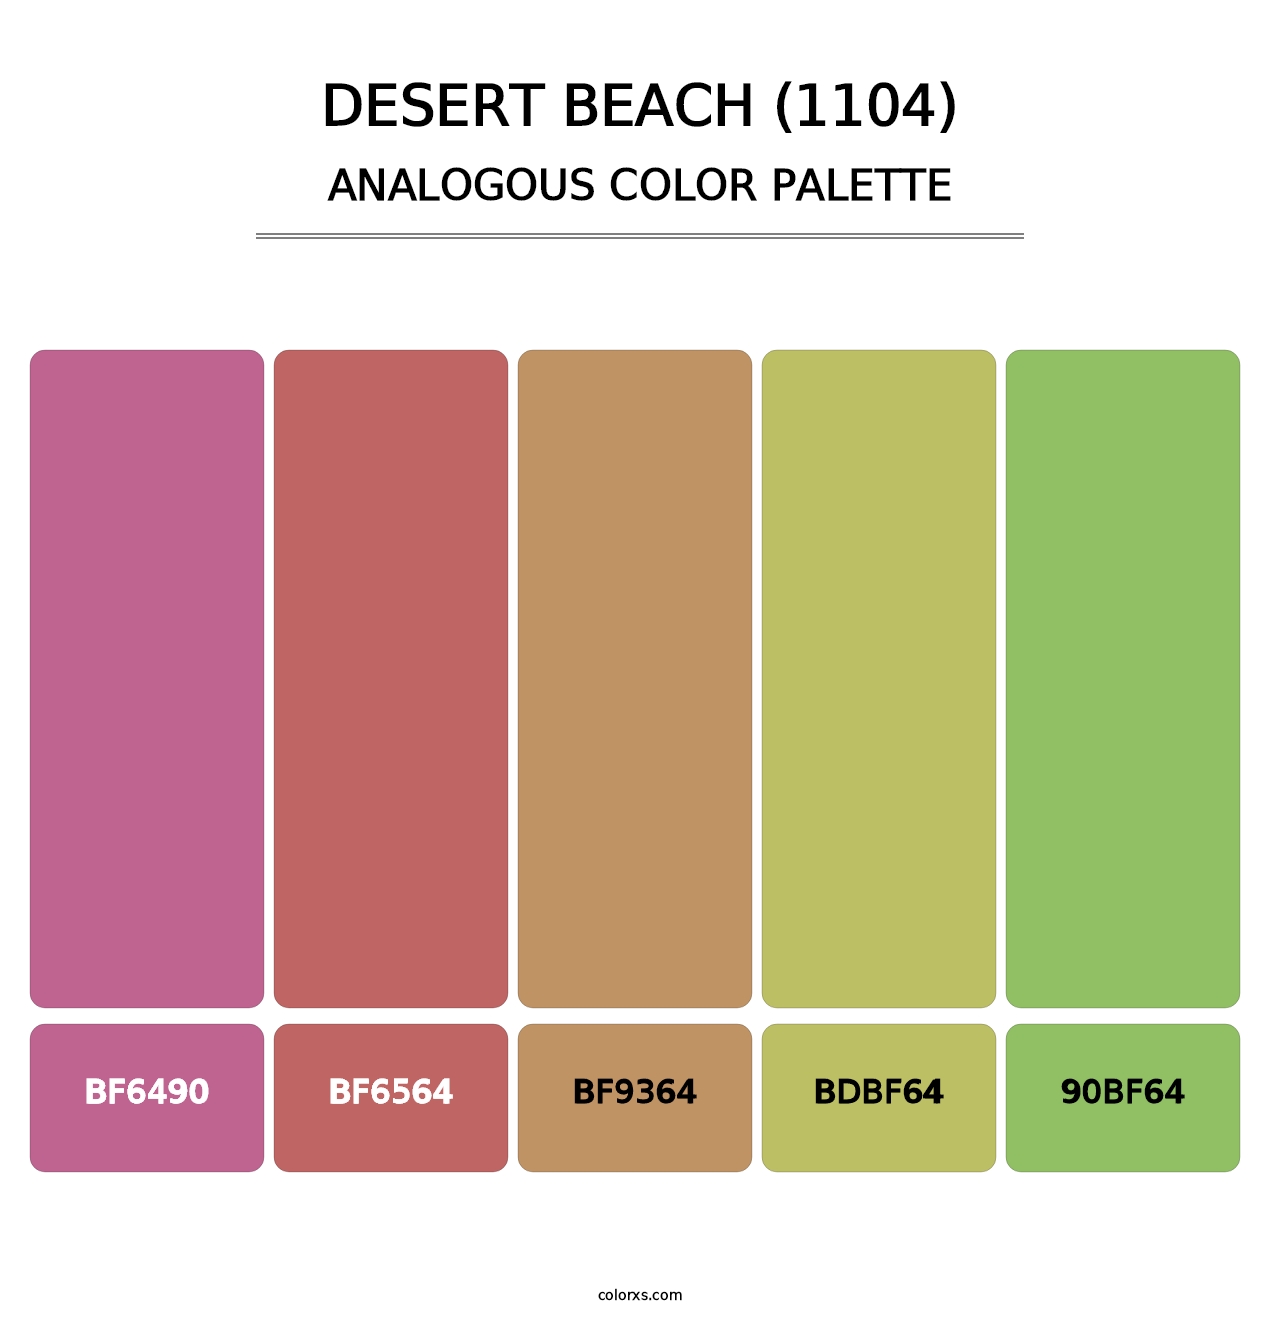 Desert Beach (1104) - Analogous Color Palette